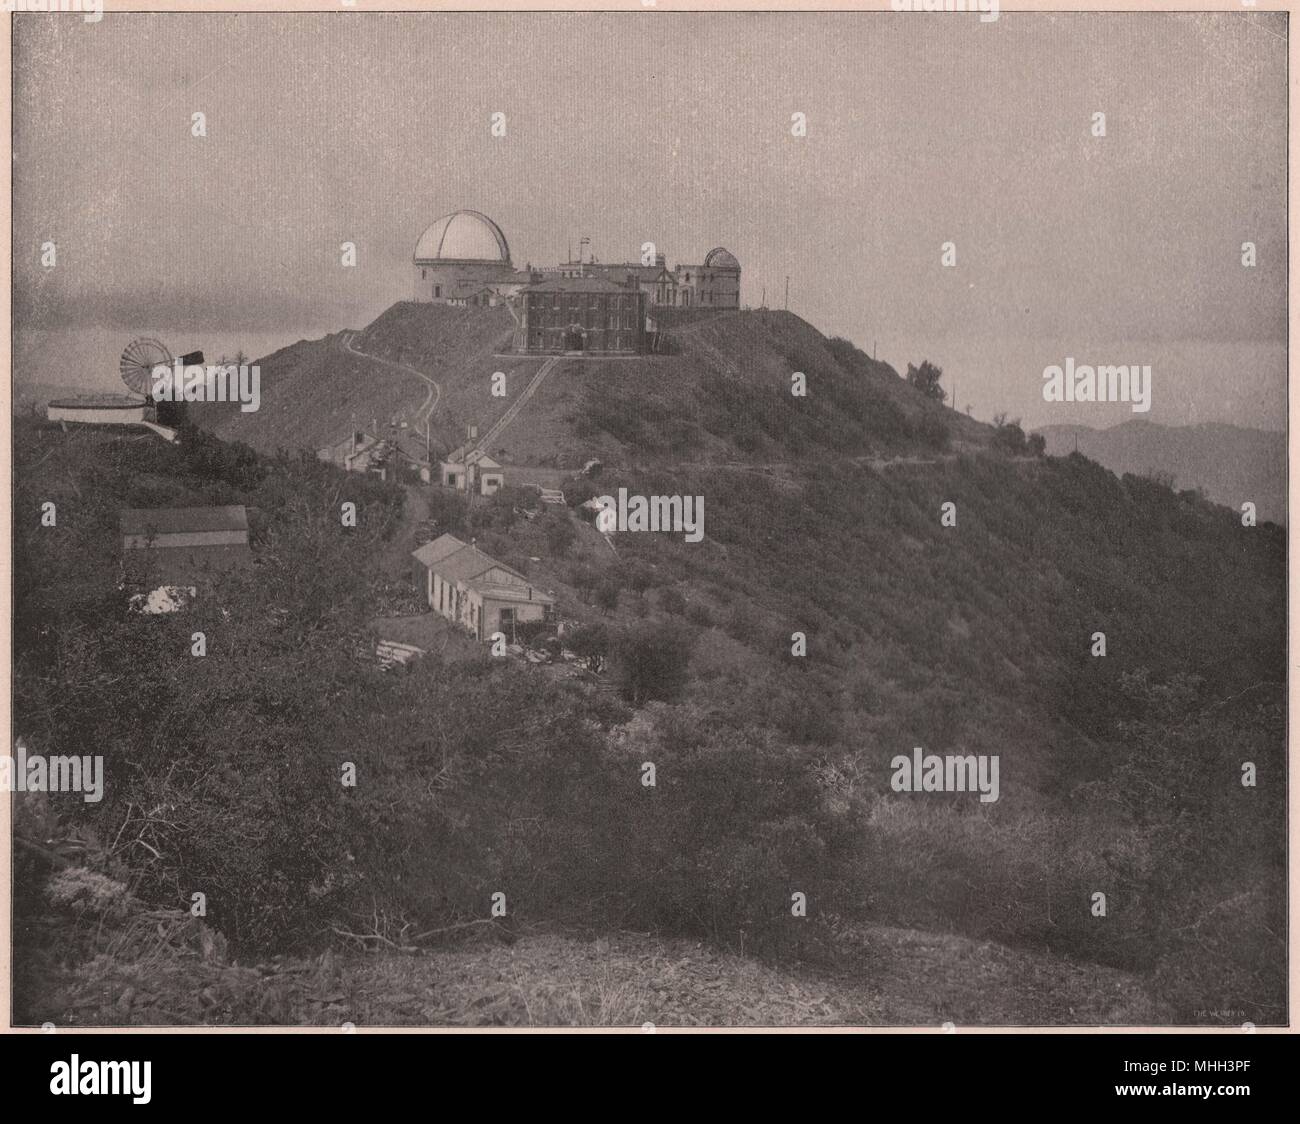 The Lick Observatory, San Jose, California Stock Photo